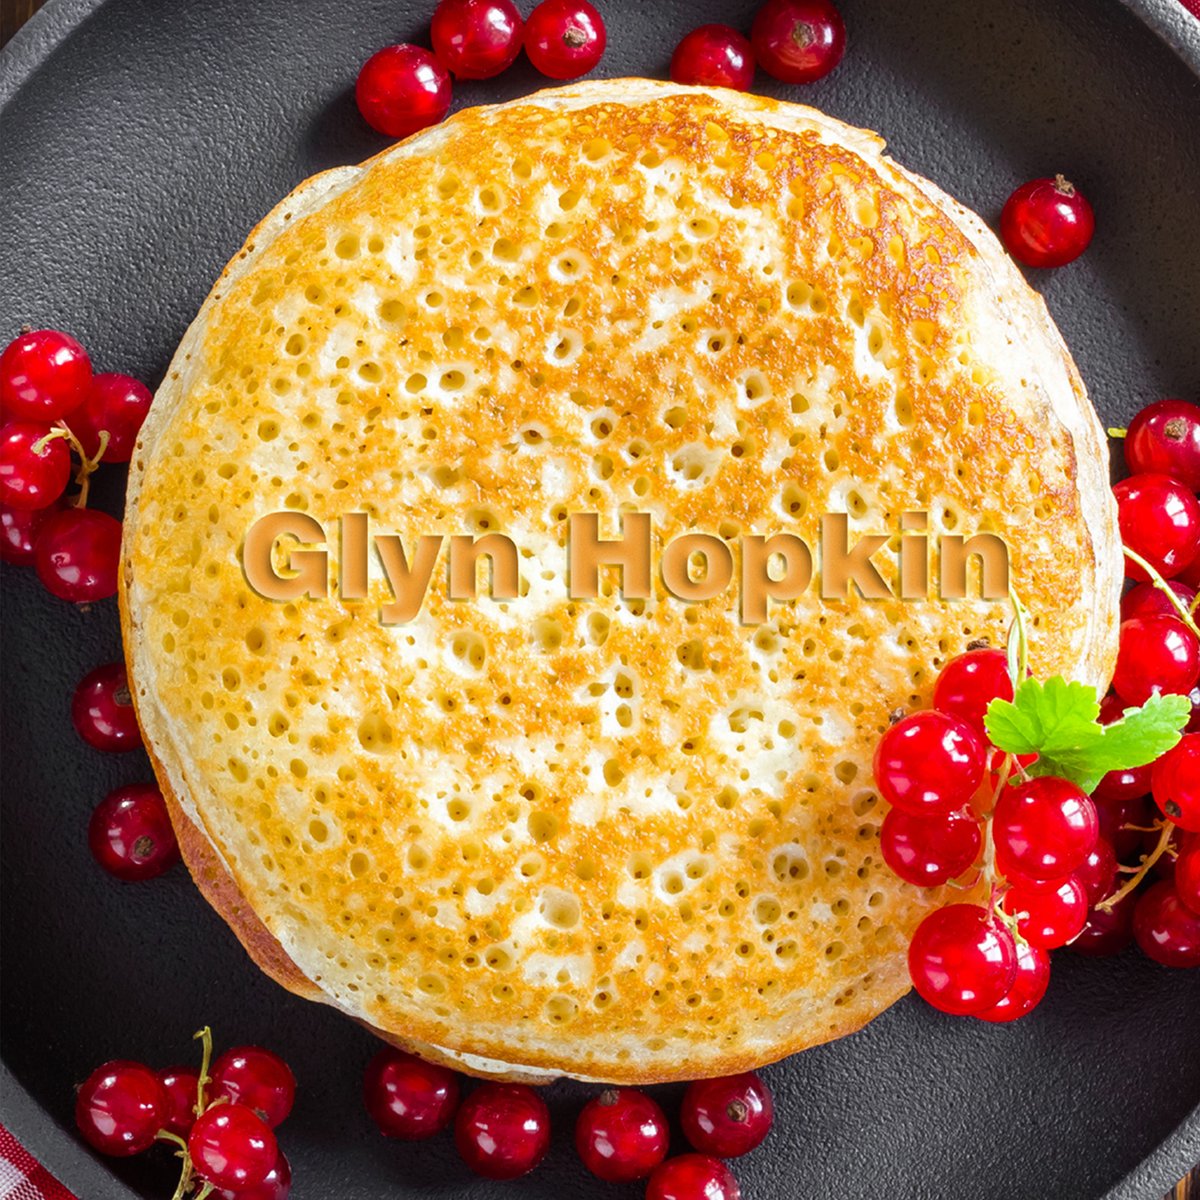 Happy Pancake Day! What's everyone having on their pancakes tonight? 🥞🤤 #PancakeDay #Pancakes #Delicious